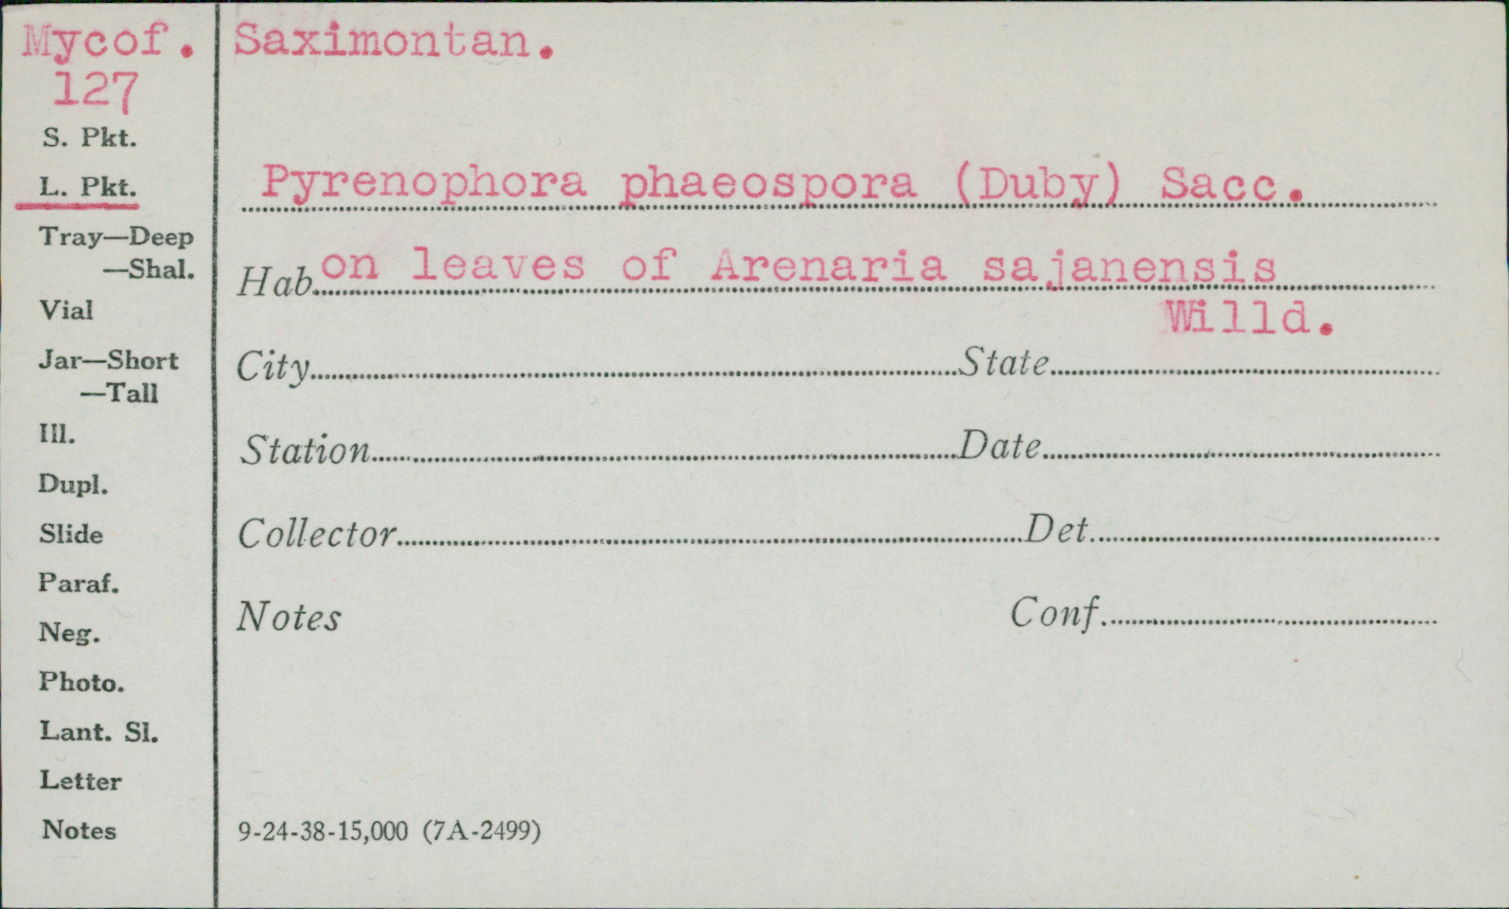 Phaeospora image